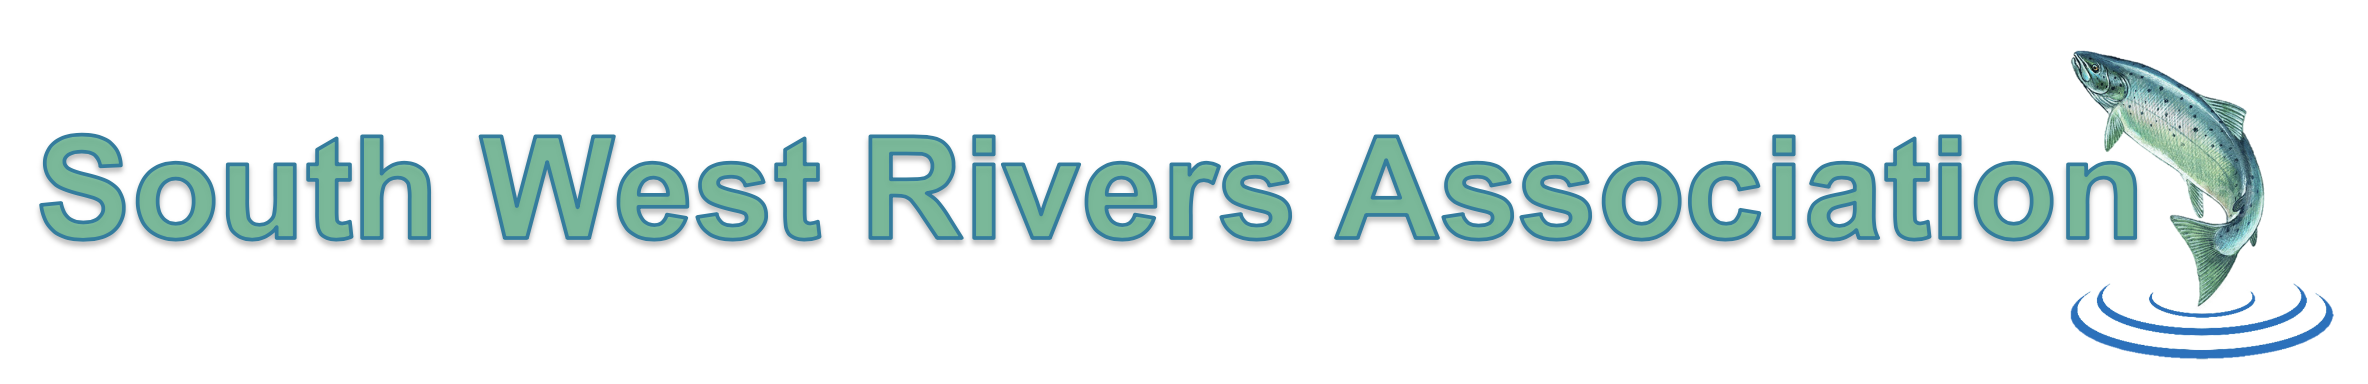 South West Rivers Association